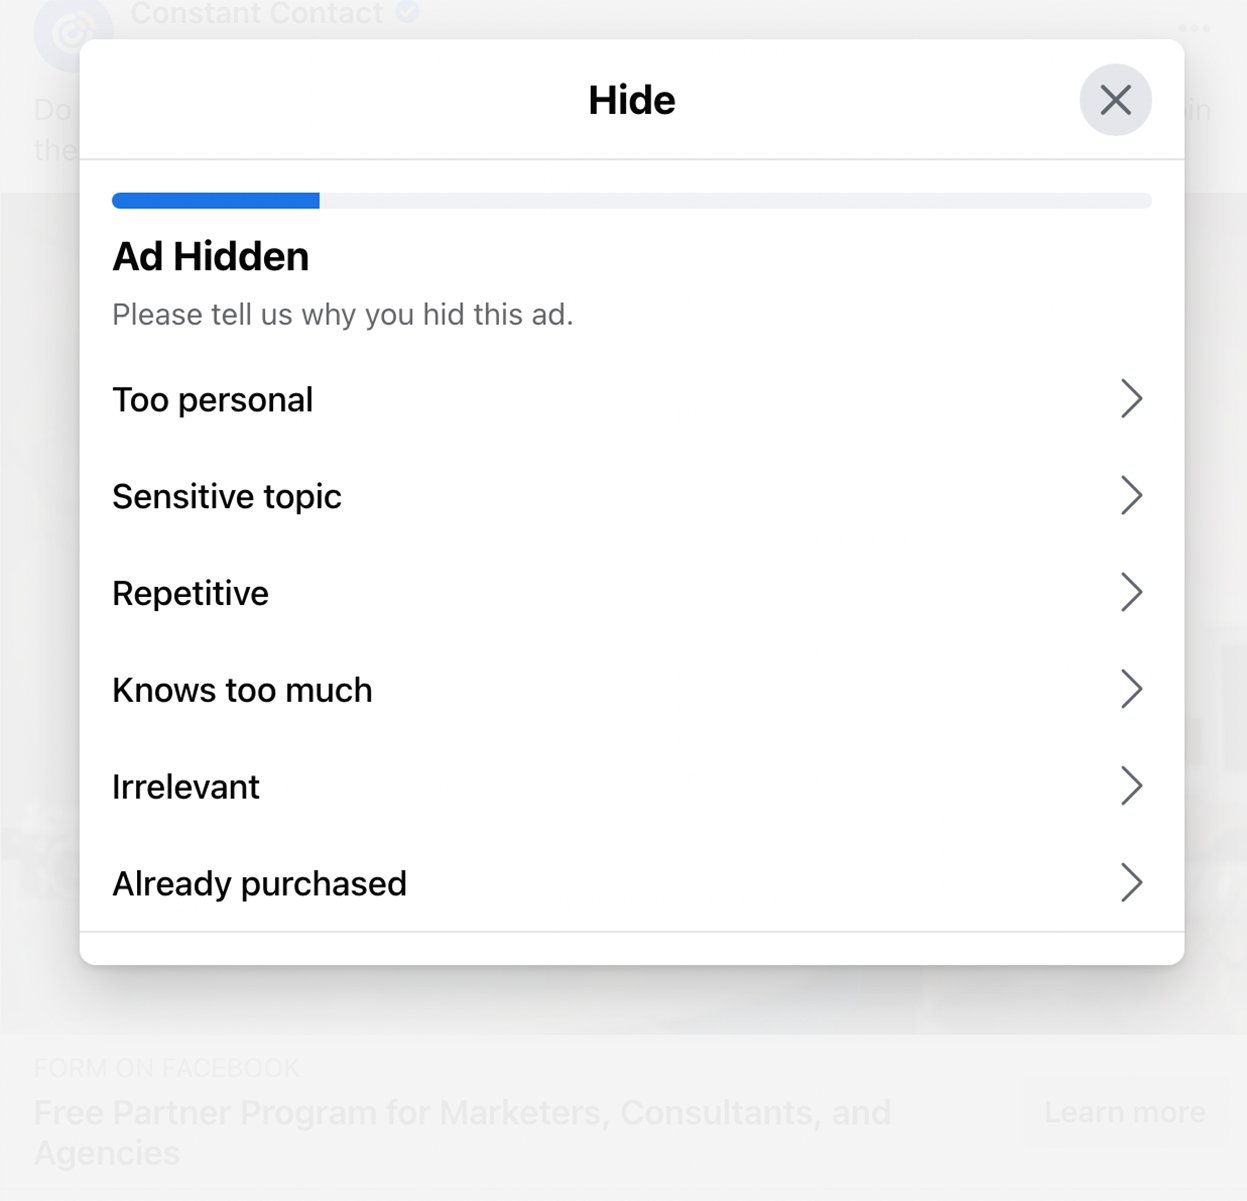 Reasons for hiding a Facebook ad